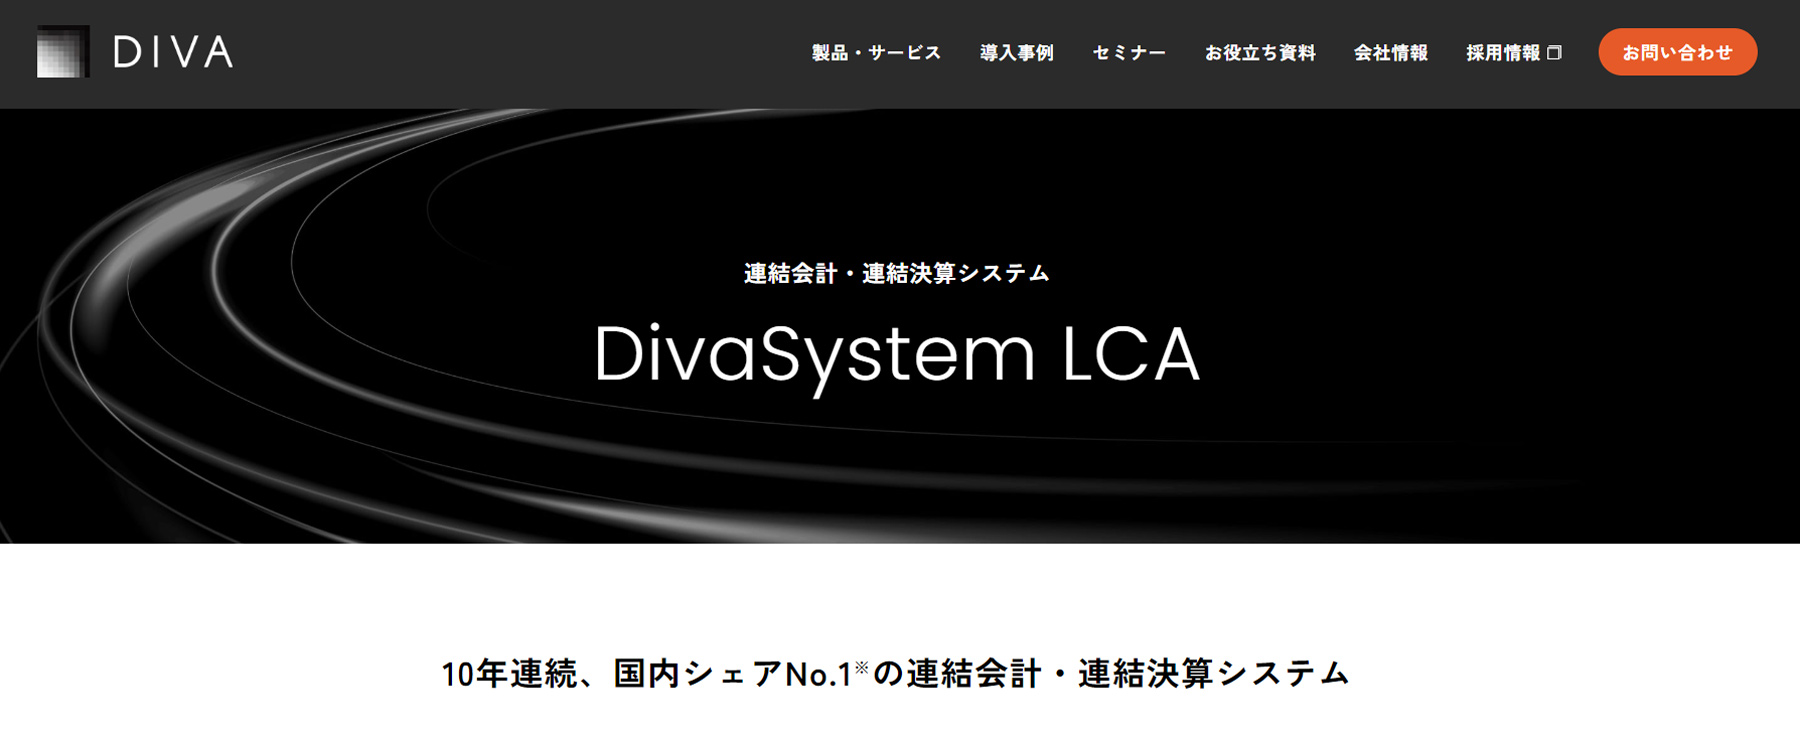 DivaSystem LCA公式Webサイト